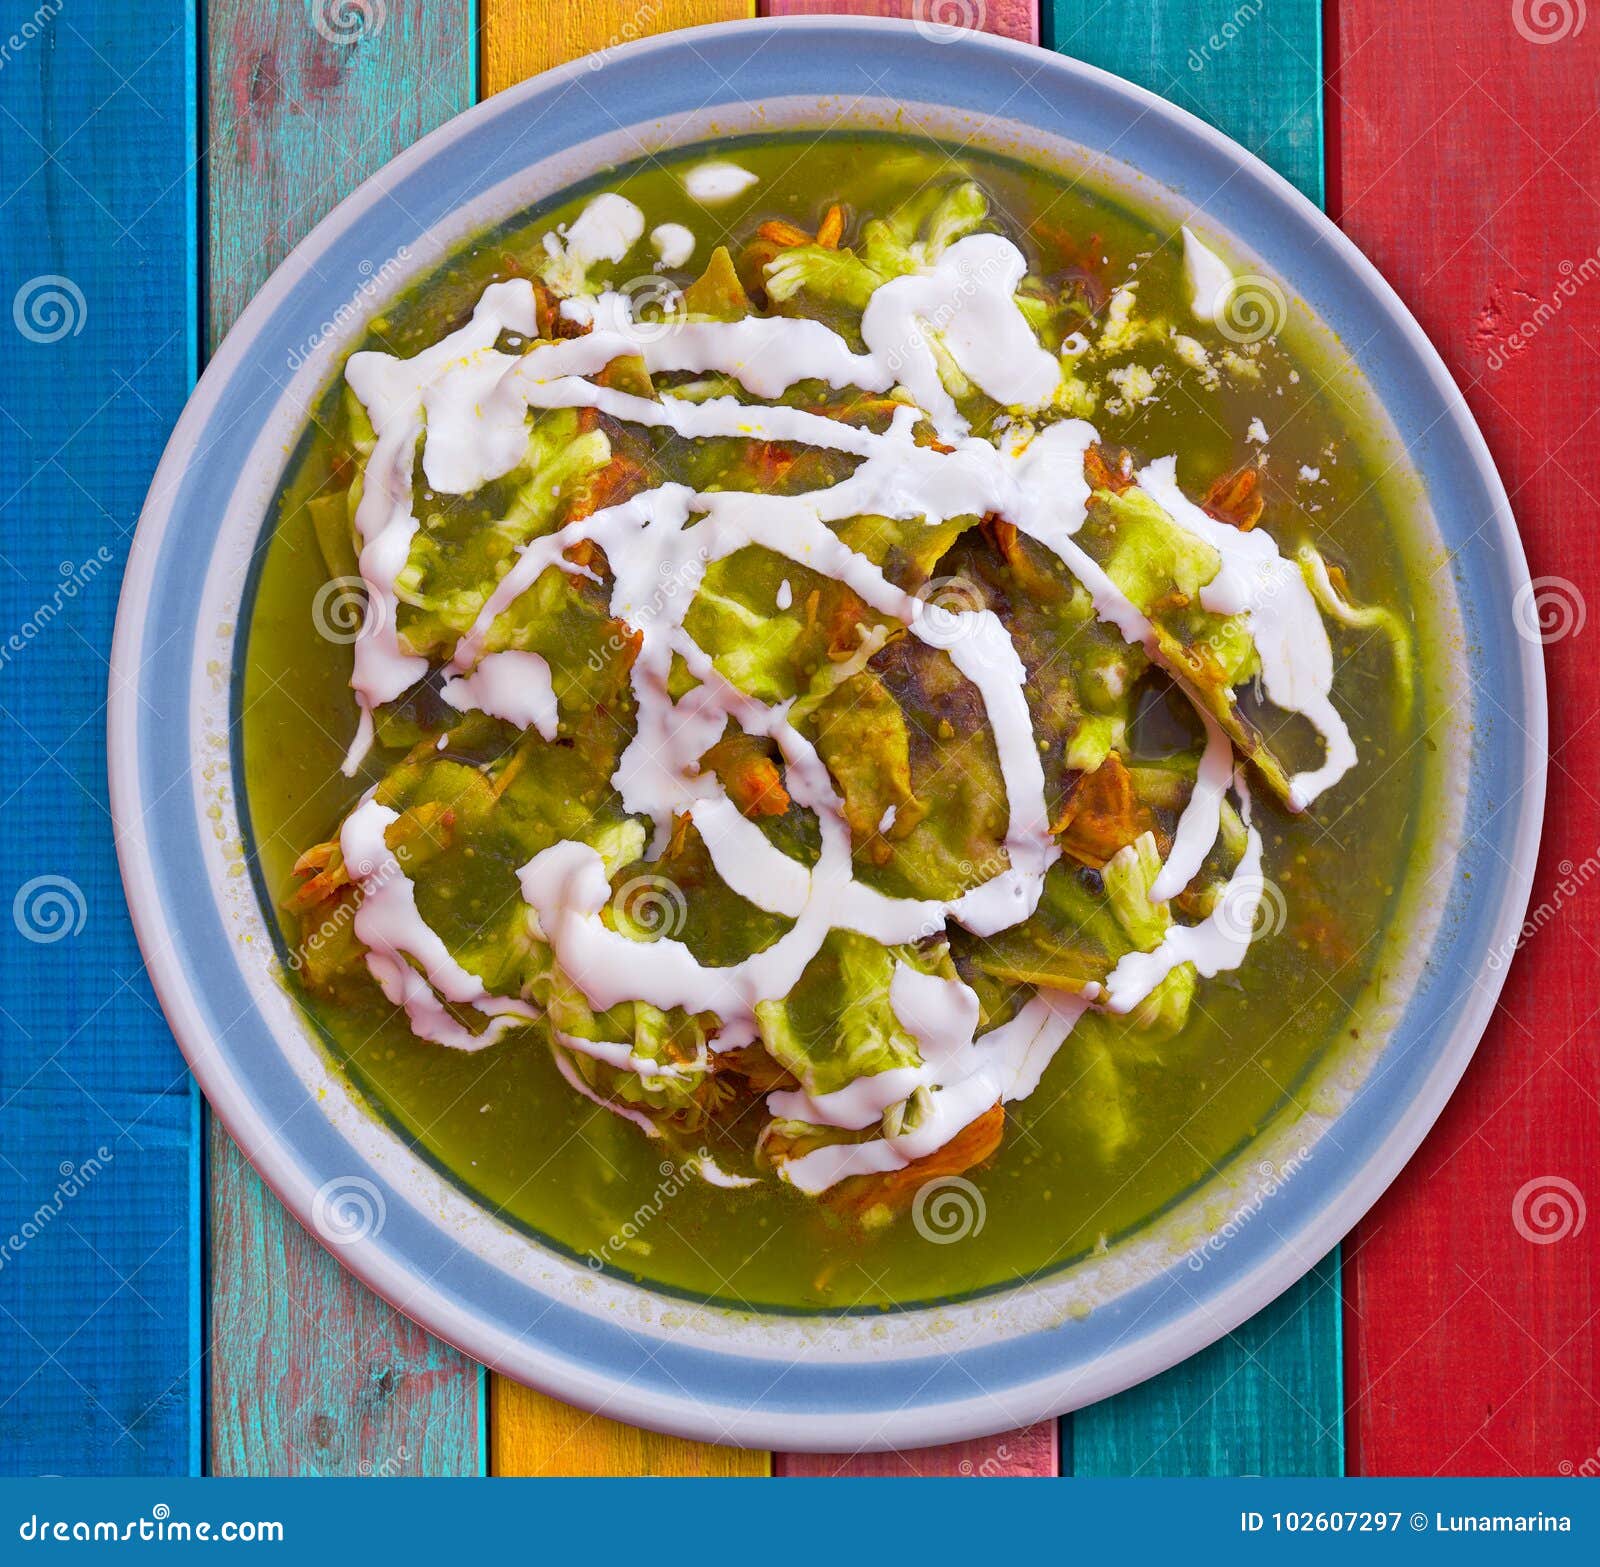 chilaquiles verdes green mexico recipe